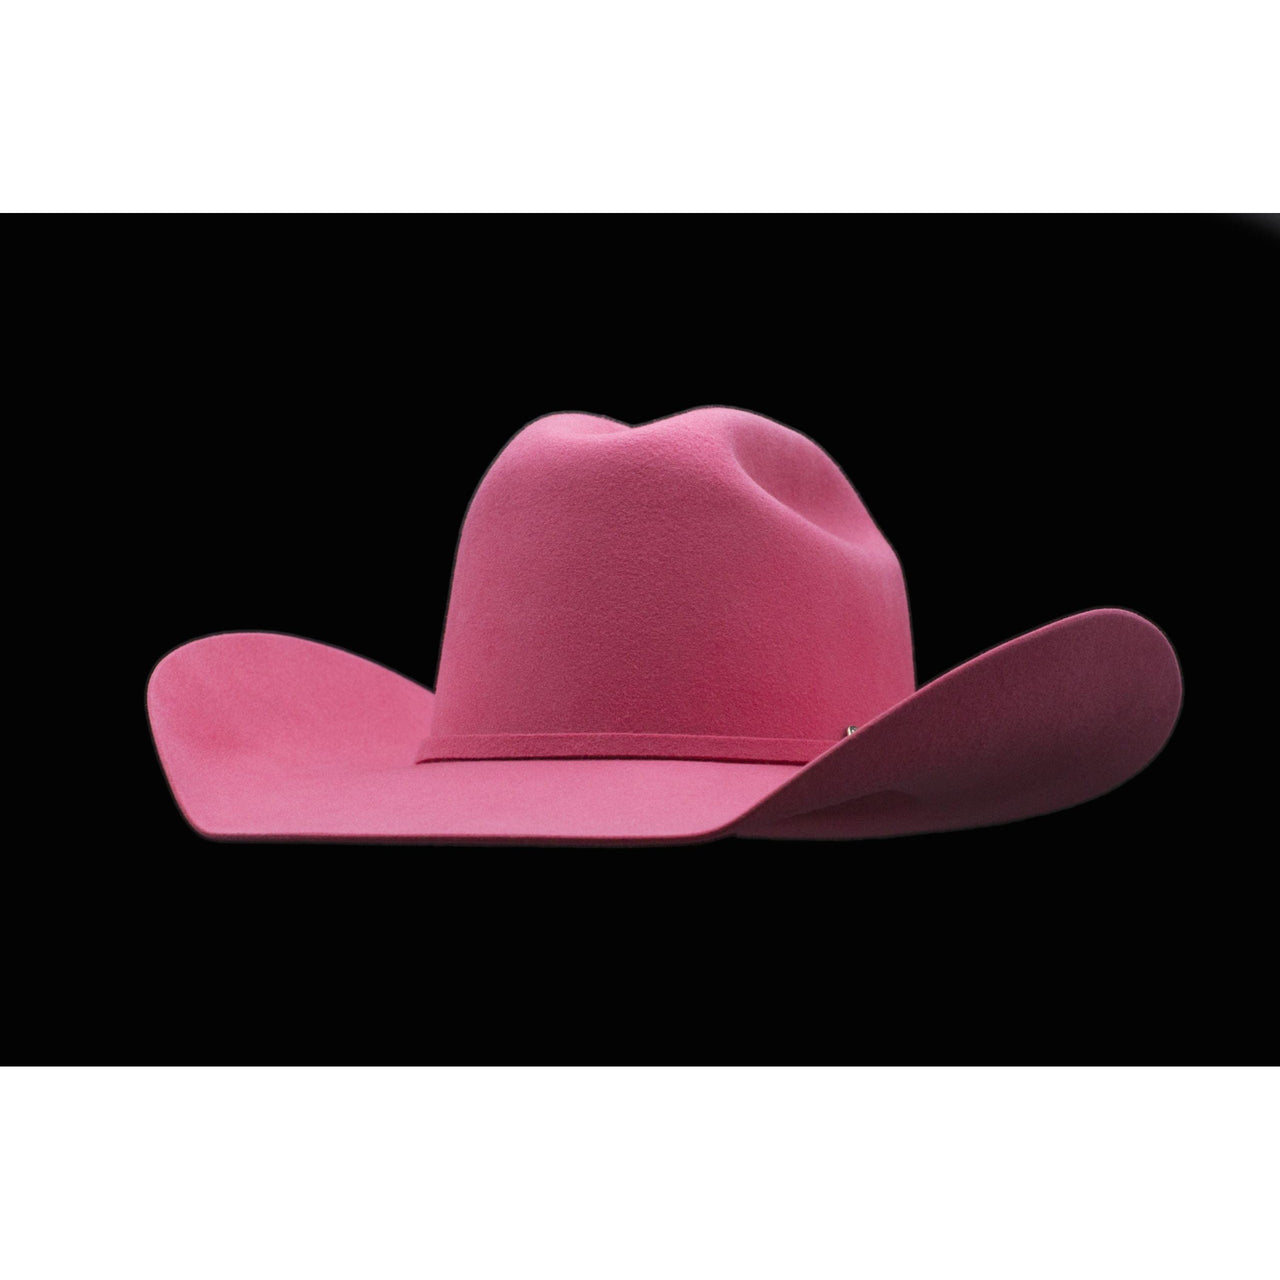 Prohat  Wool Felt Precreased Western Hat - Neon Vegas (Pink)